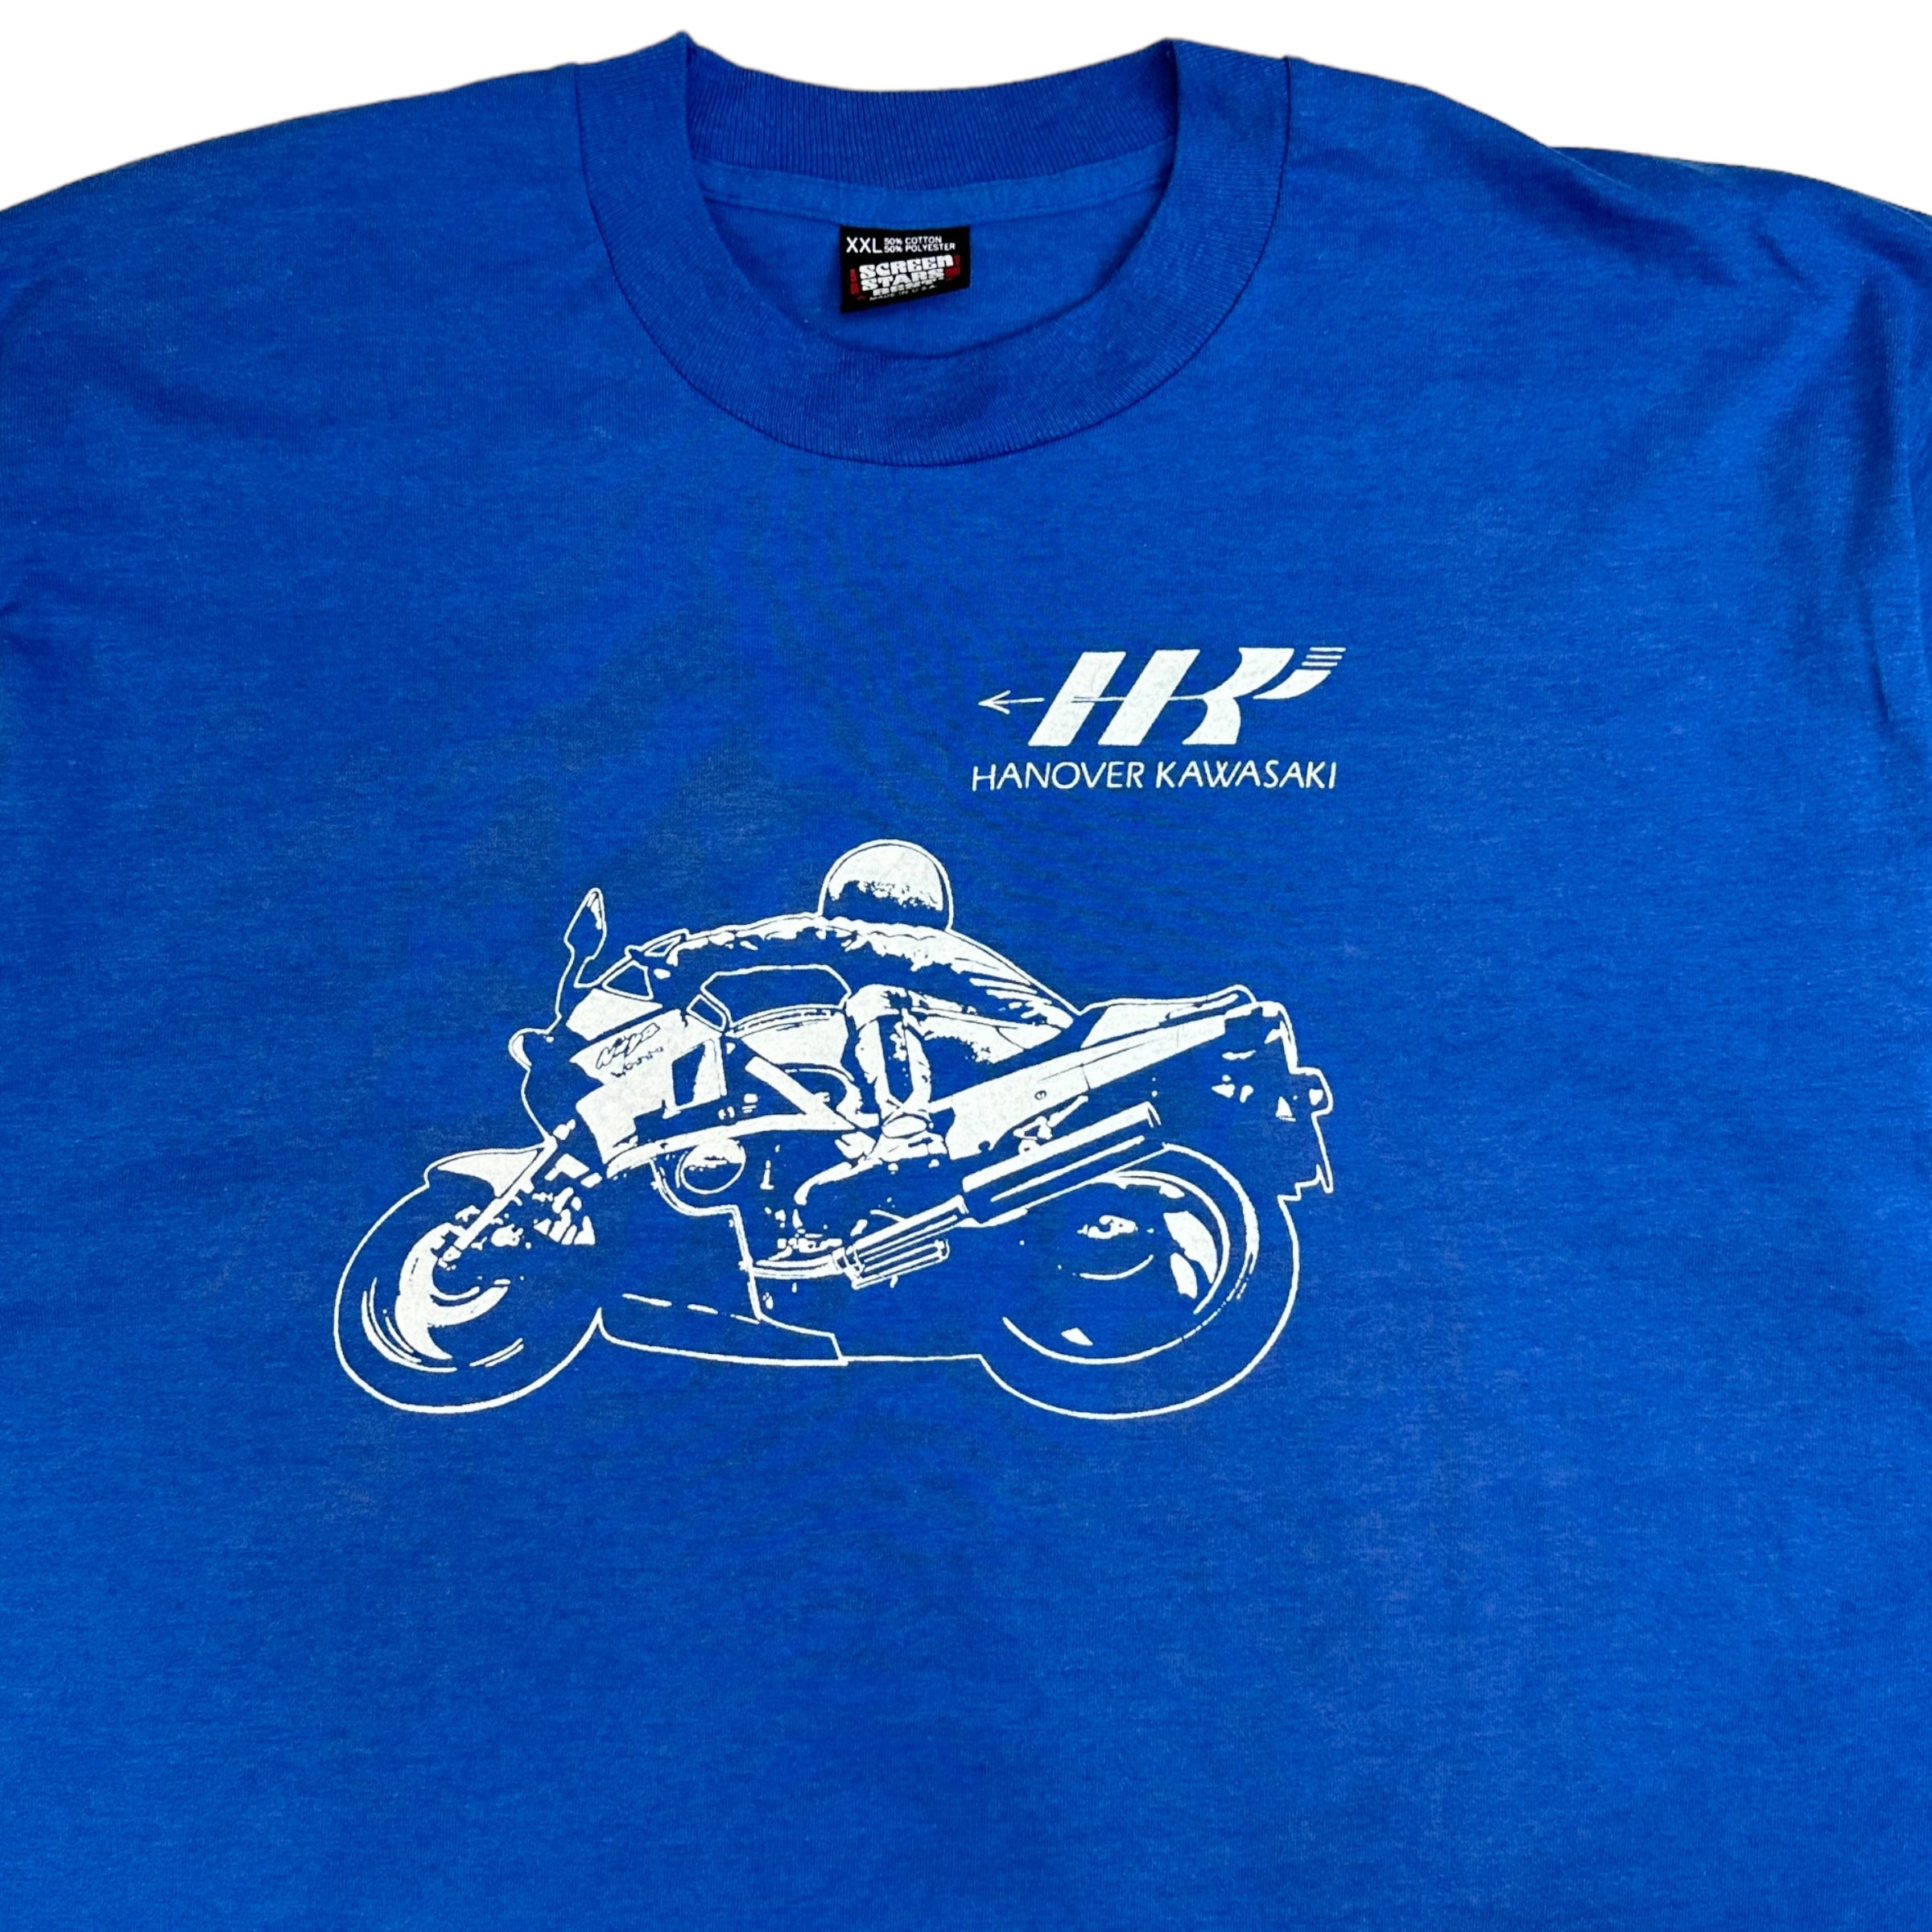 Vintage Hanover Kawasaki Racing Tee